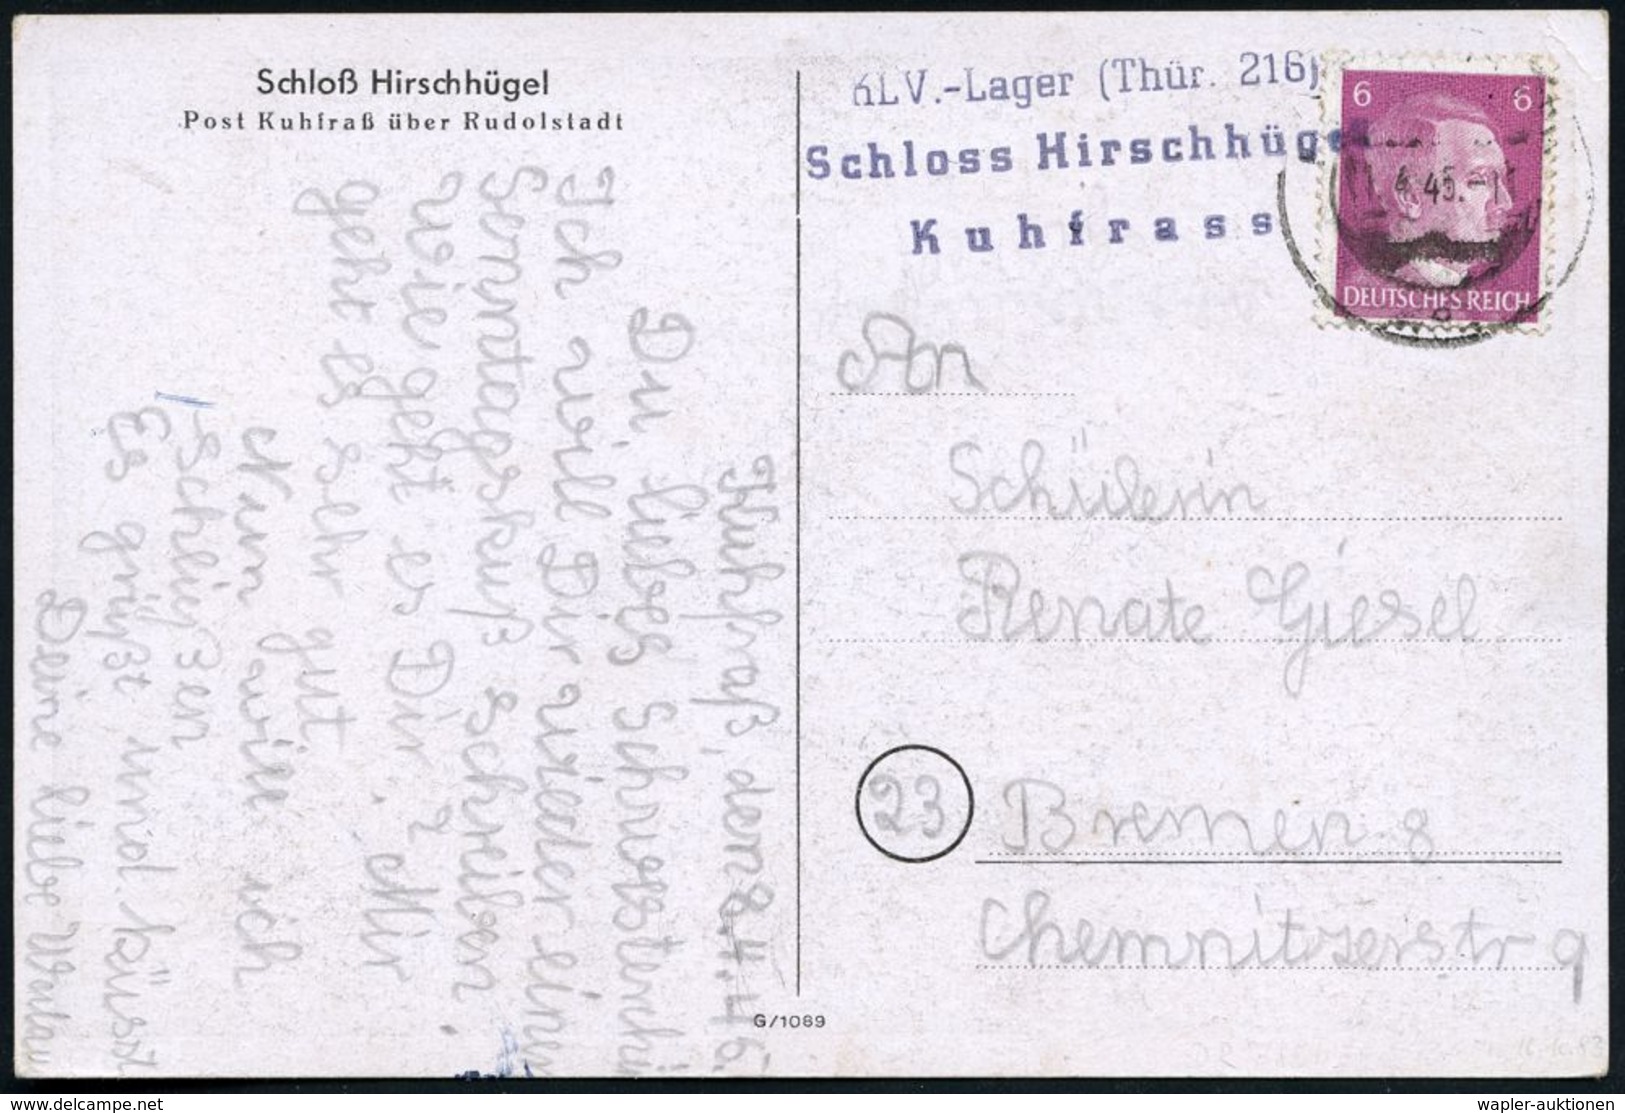 KINDERLANDVERSCHICKUNG (KLV) / KLV-LAGER : Kuhfrass 1945 (11.4.) Viol. 3L: K L V. - Lager (Thür. 216)/ Schloss Hirschhüg - Guerre Mondiale (Seconde)